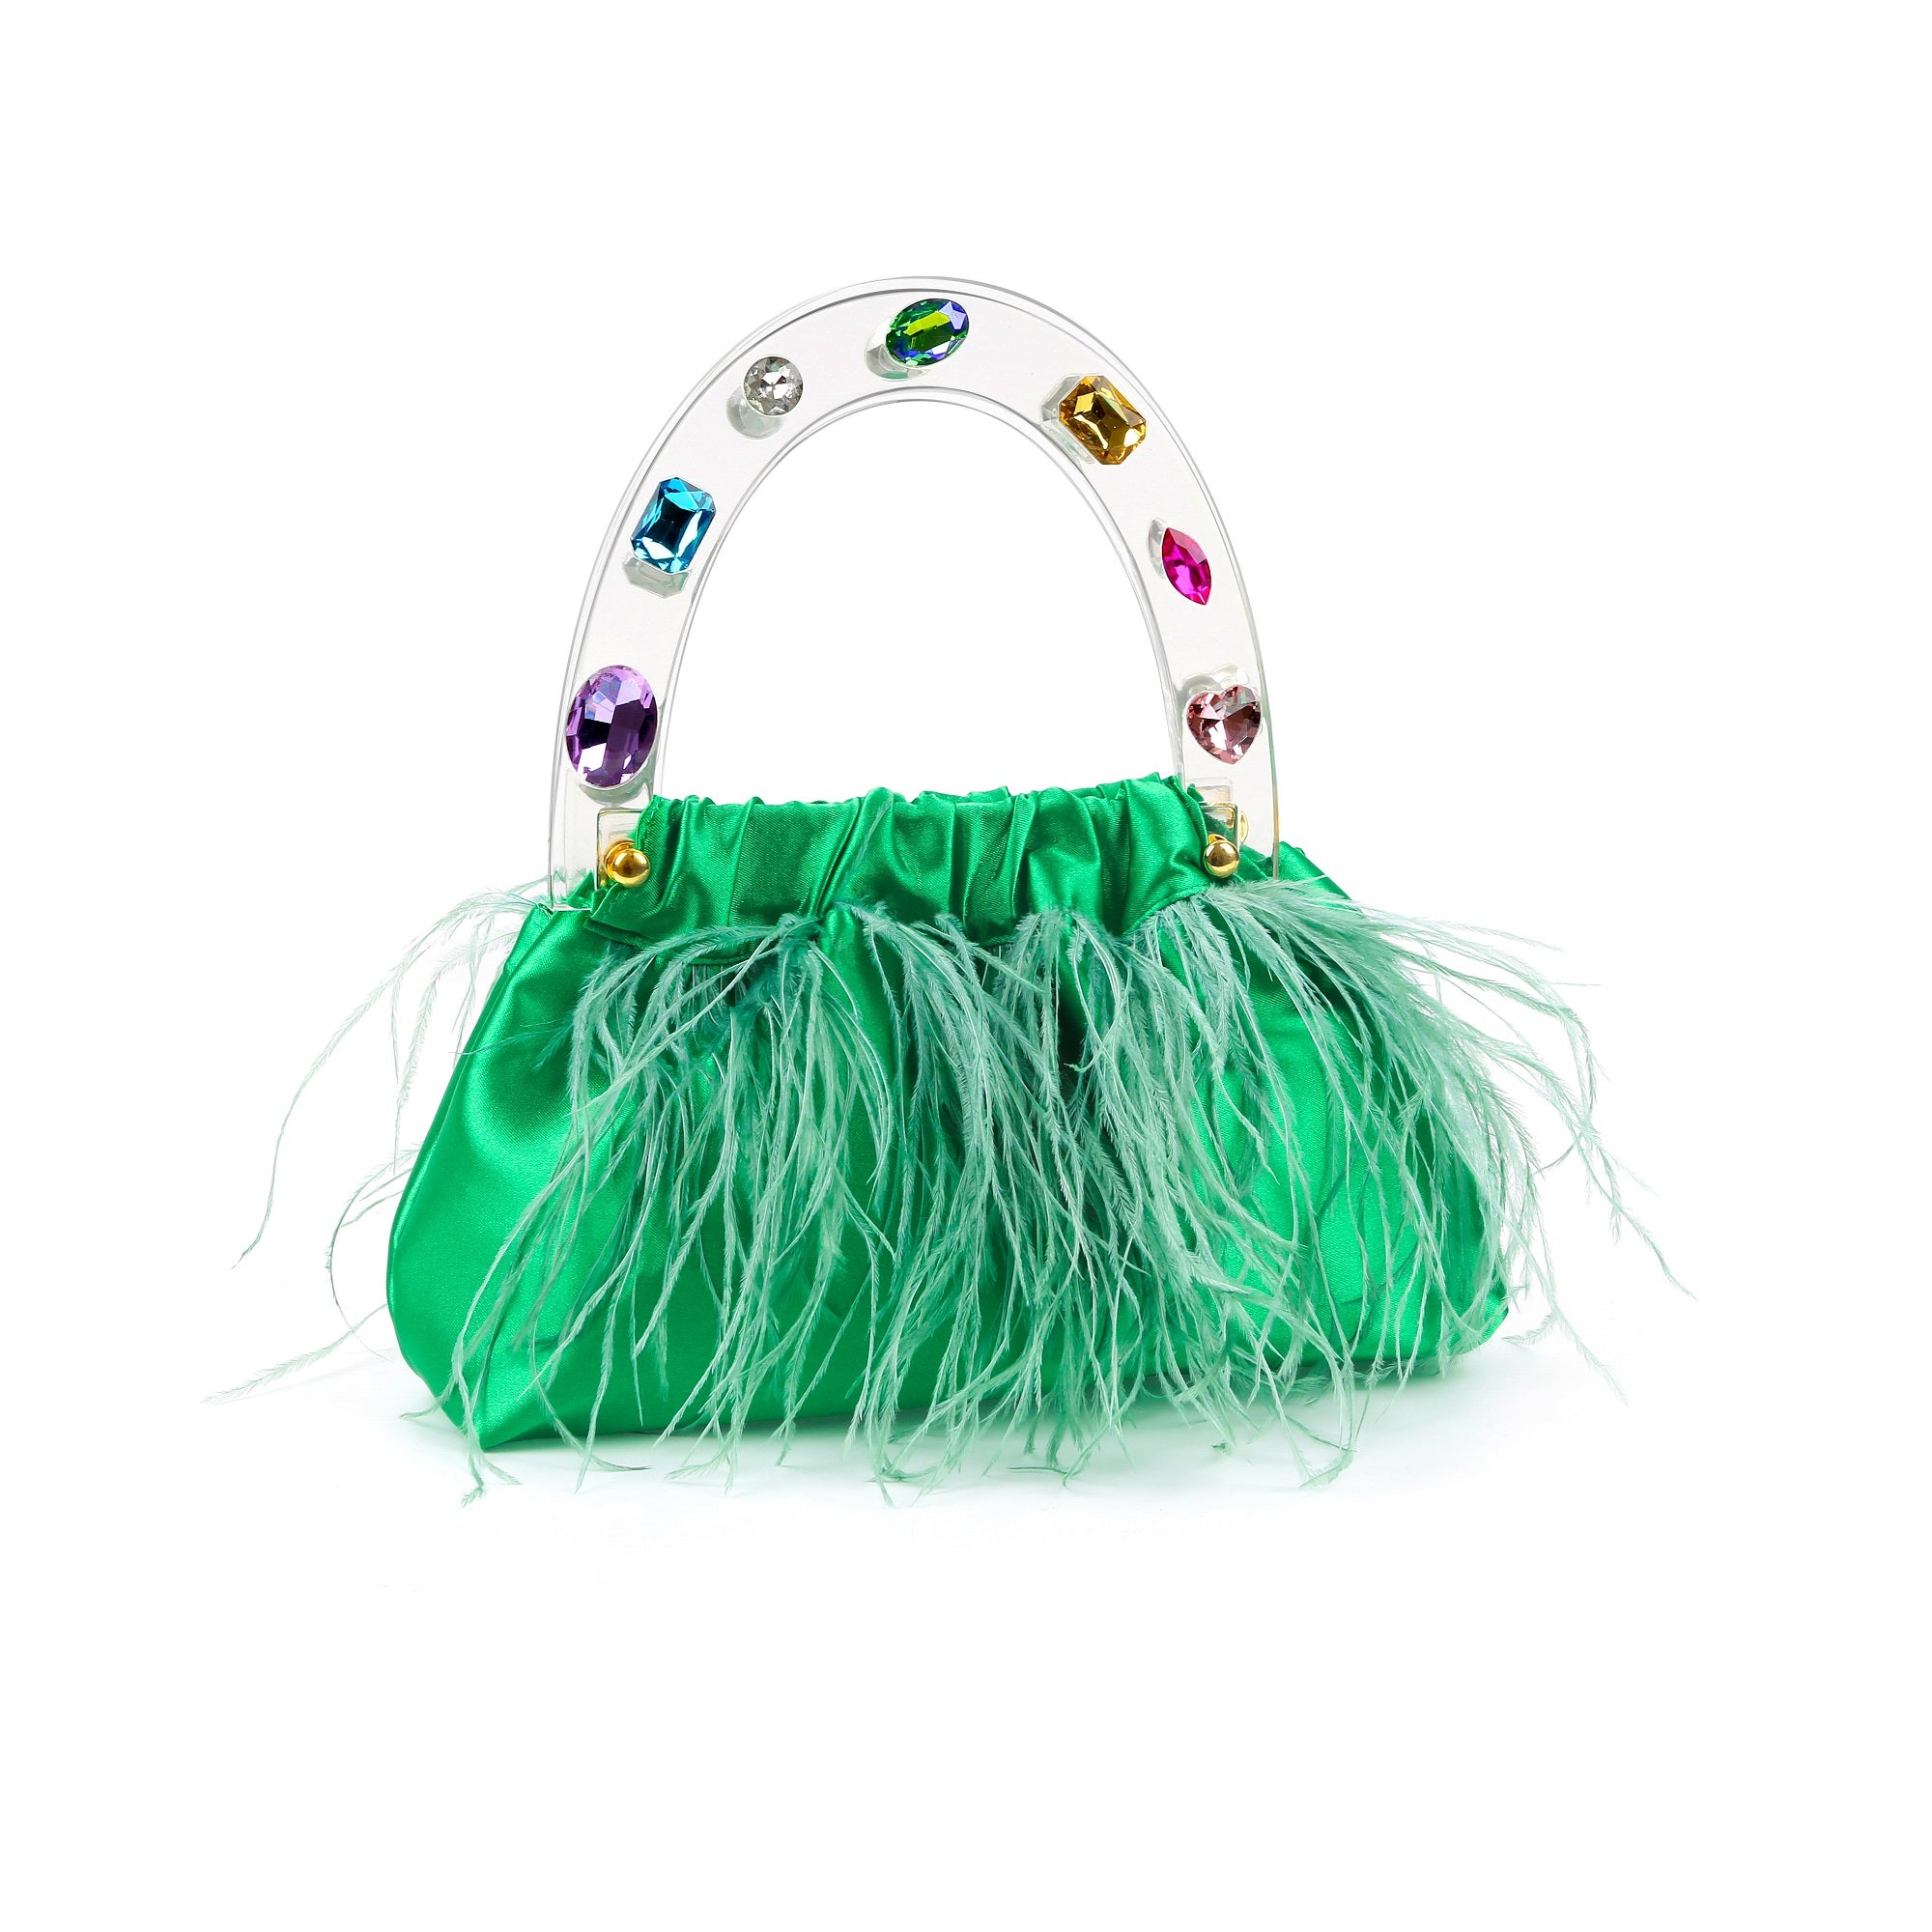 Ostrich Queen Bee Stripe 2 pcs Satchel - Tote > Fashion Handbags